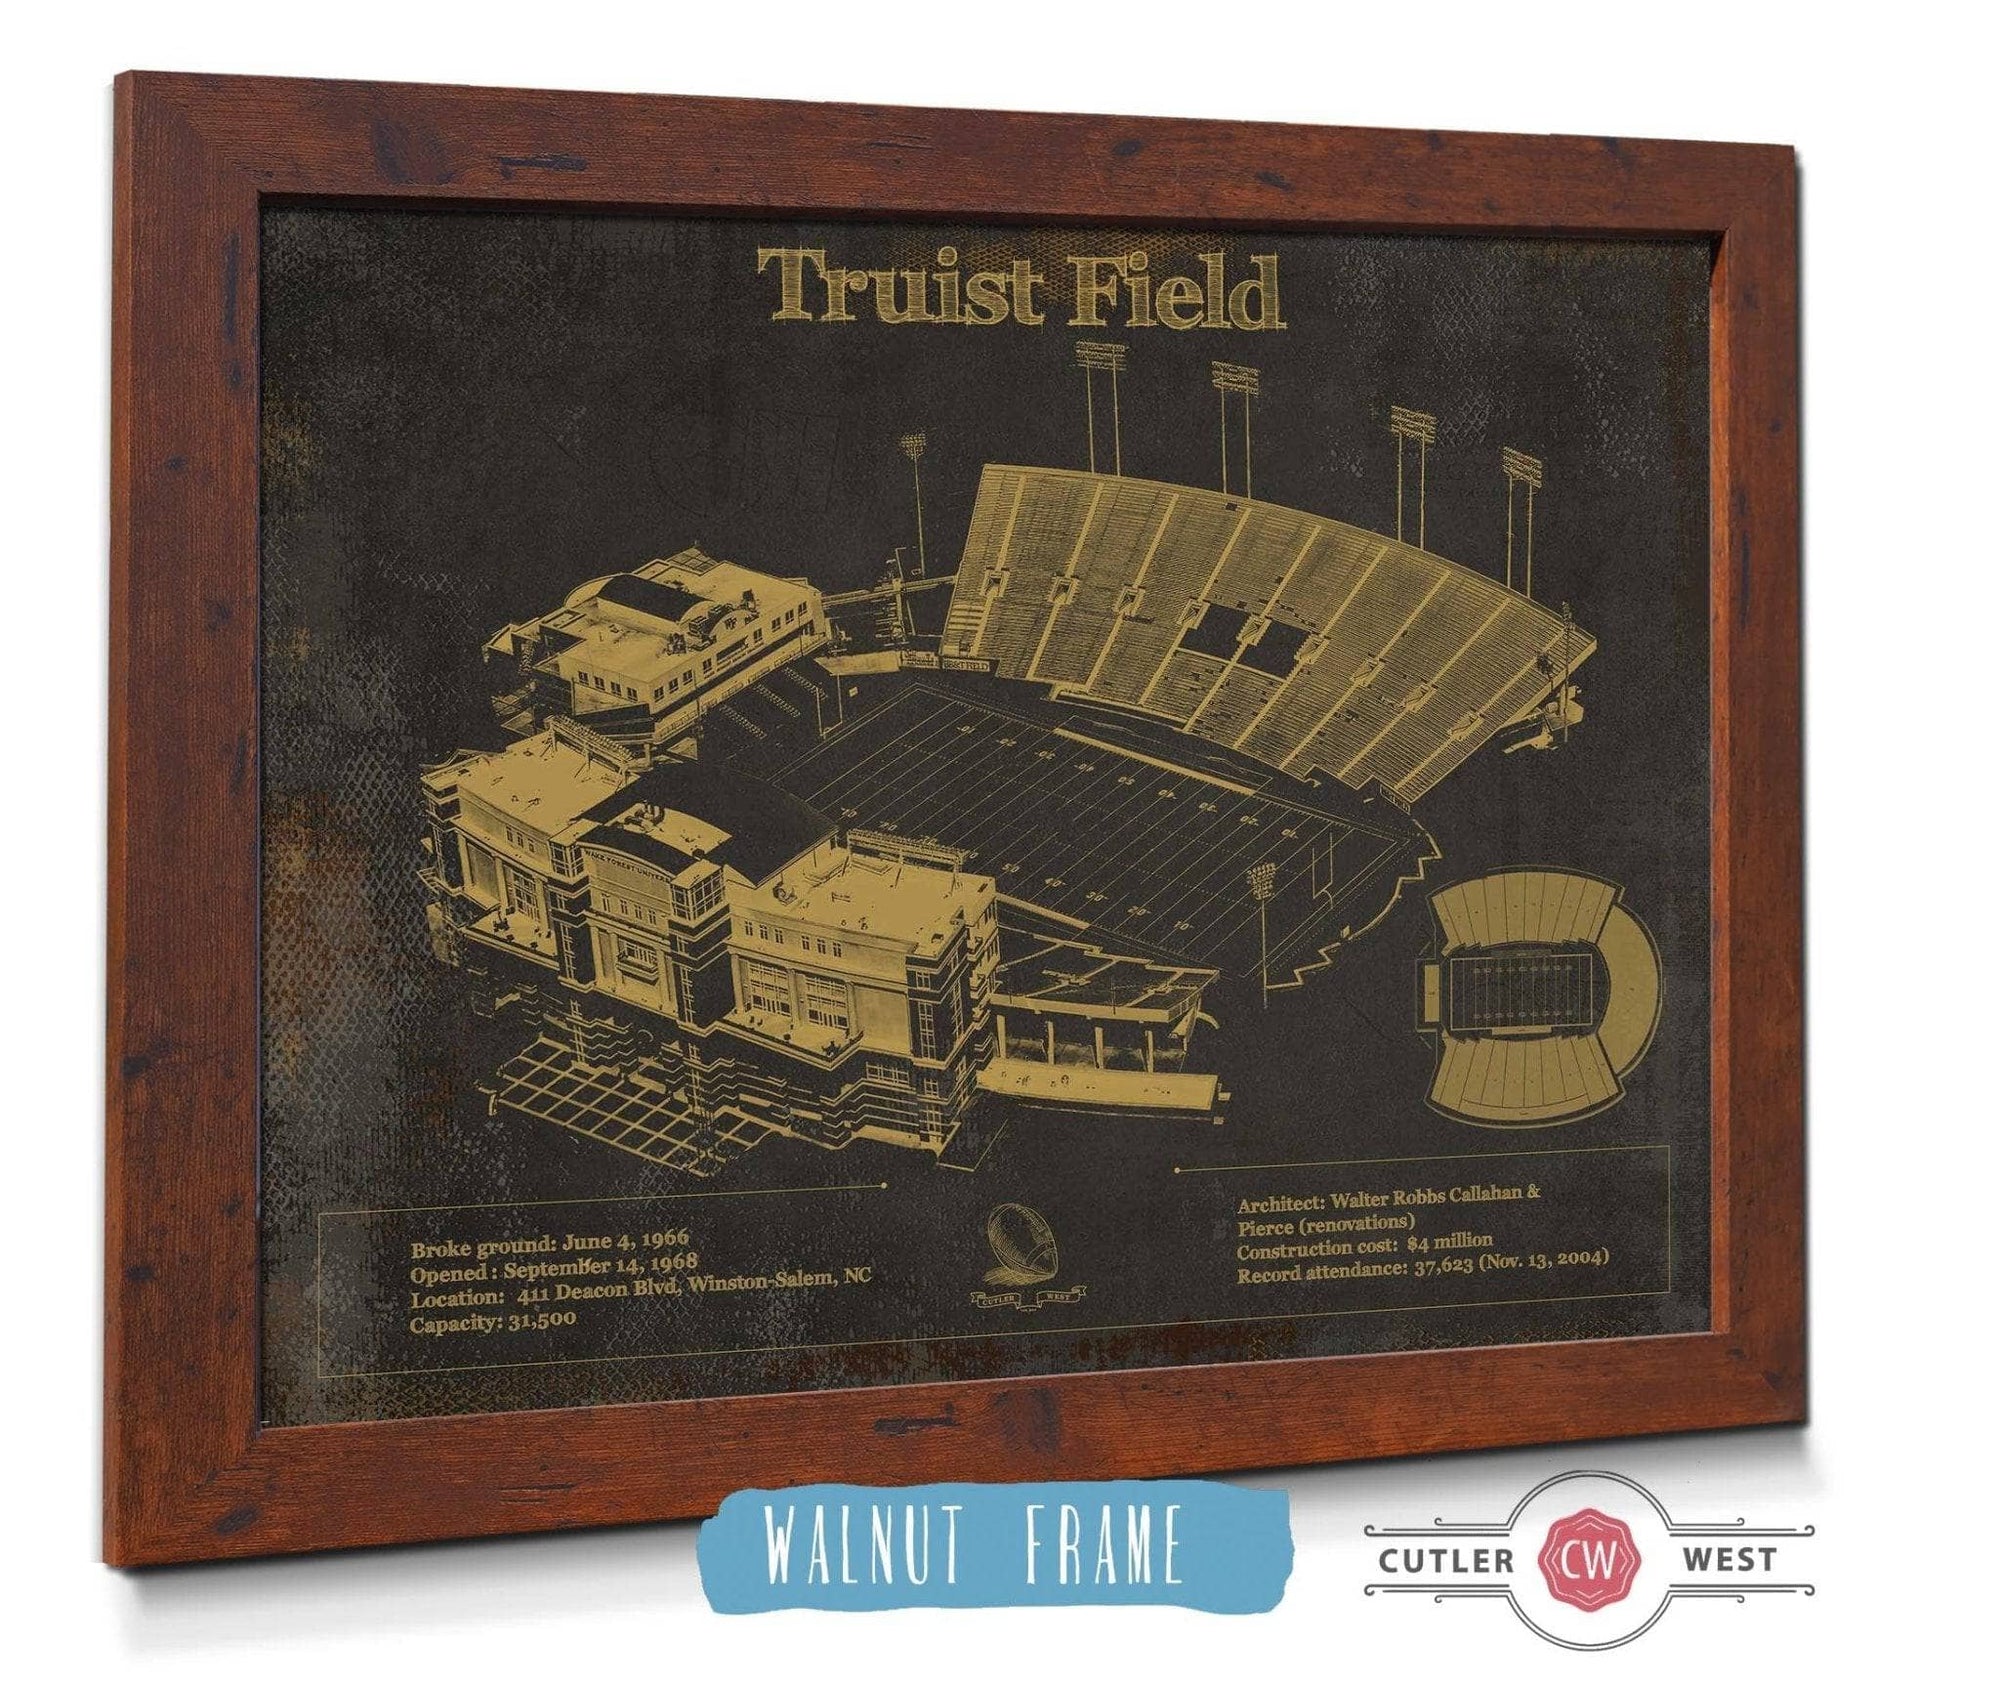 Cutler West 14" x 11" / Walnut Frame Wake Forest Football Art - Truist Field Vintage Wall Art 9356298441-14"-x-11"7456